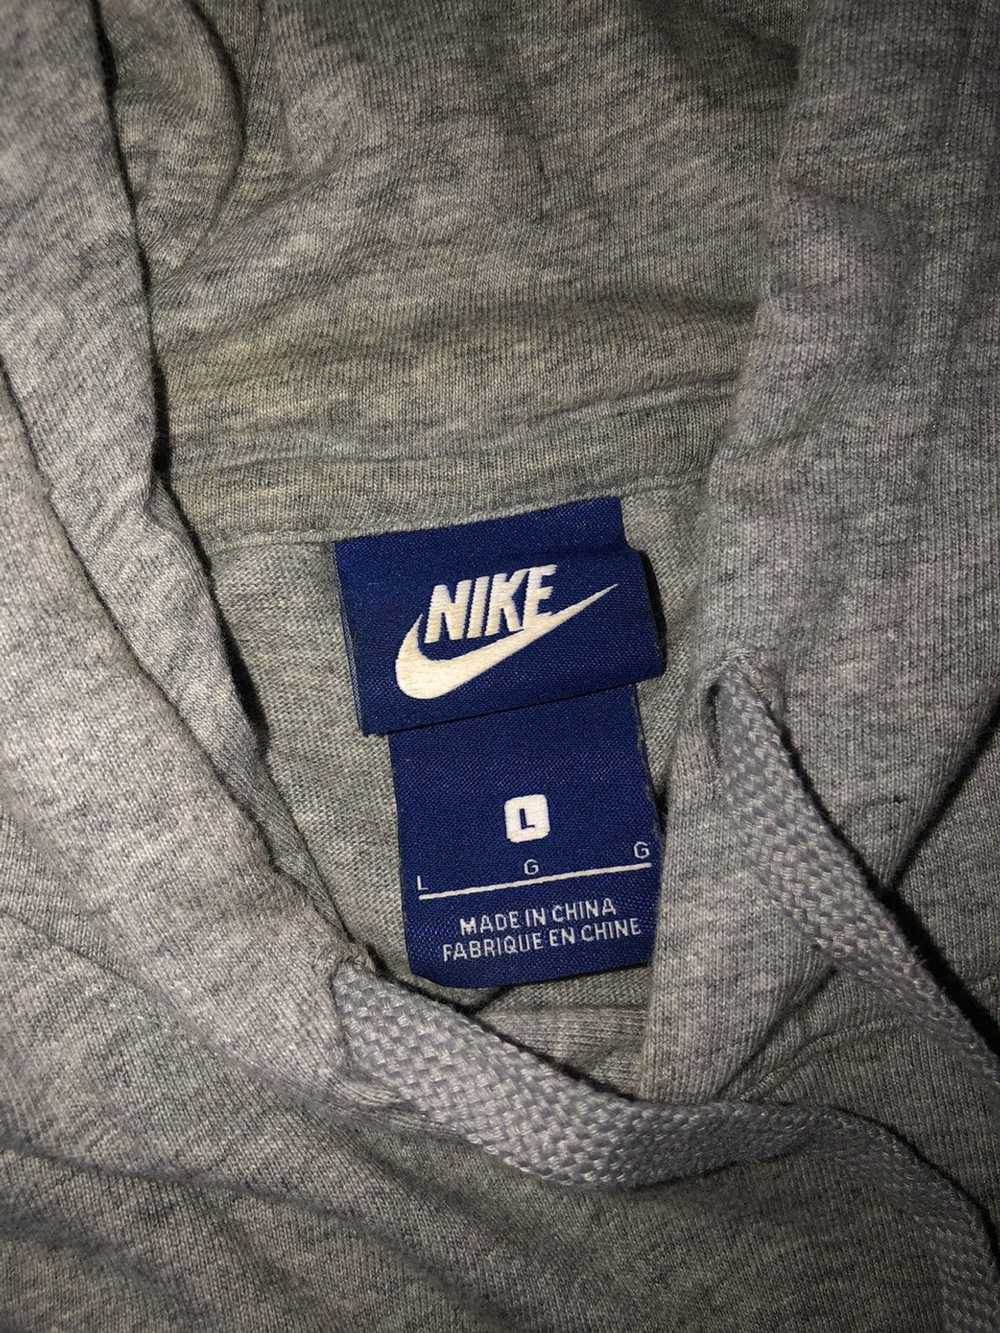 Nike Nike Shirt Hoodie - image 3